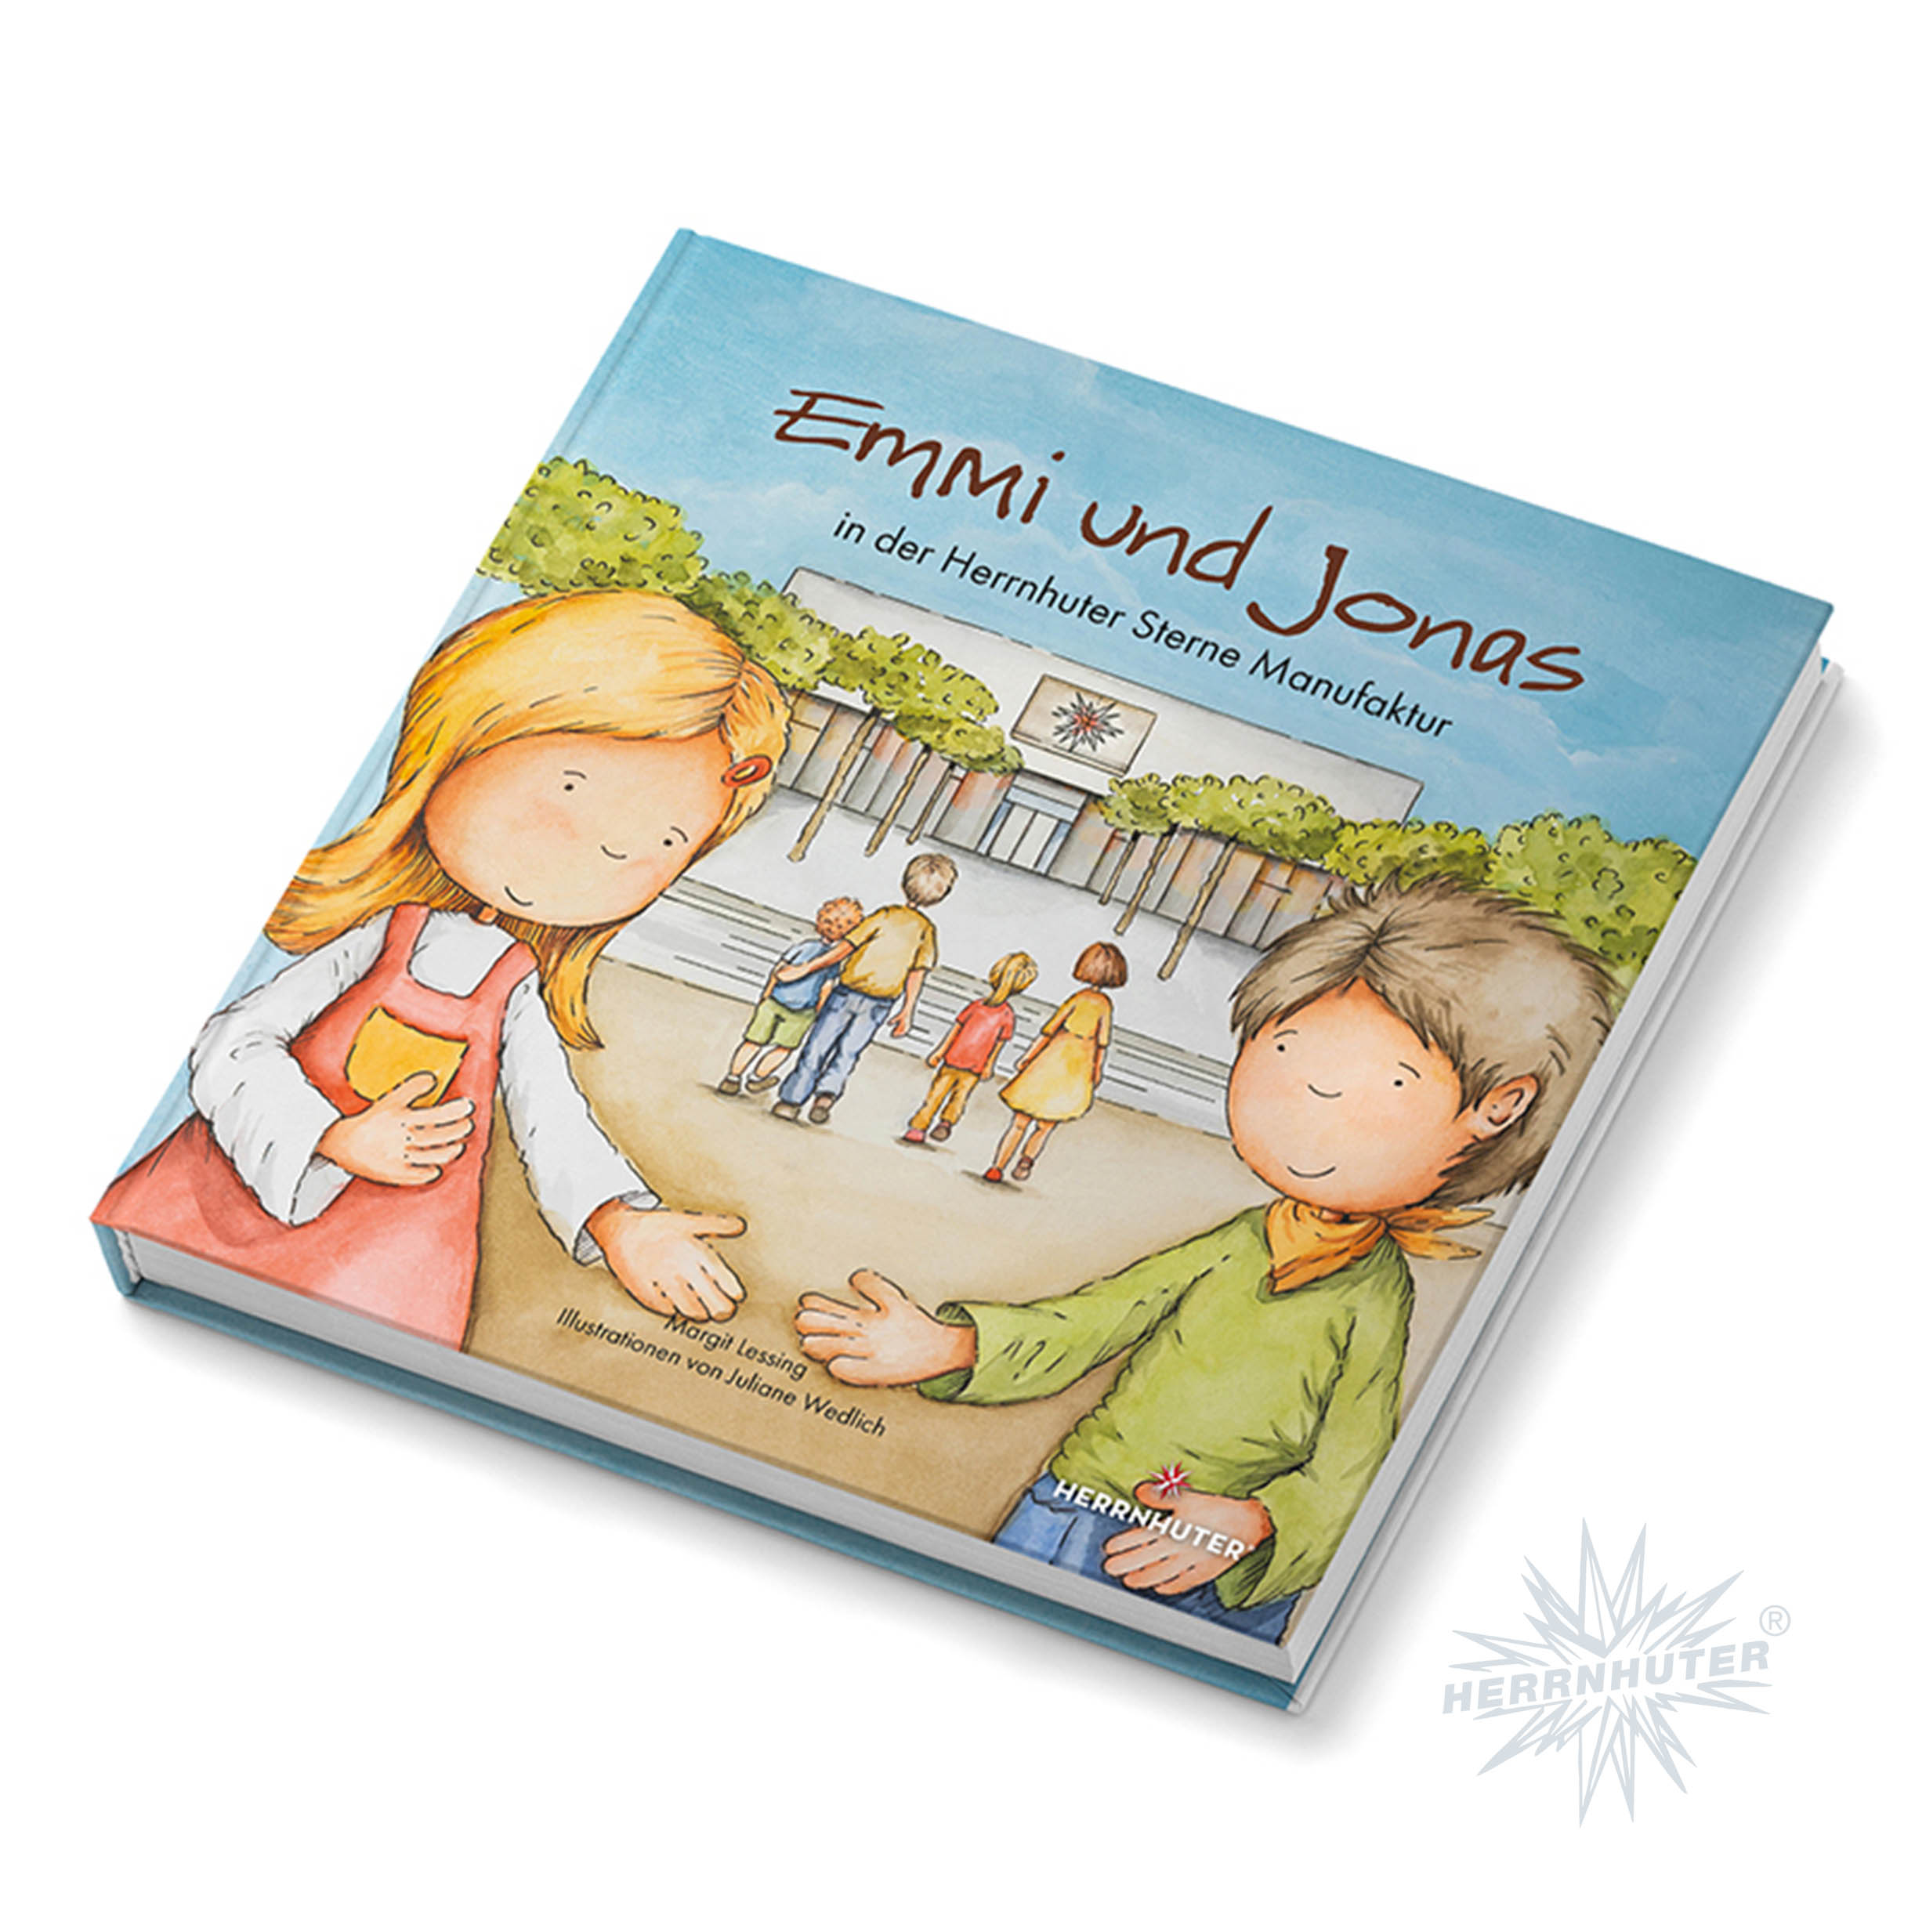 Kinderbuch -Emmi & Jonas